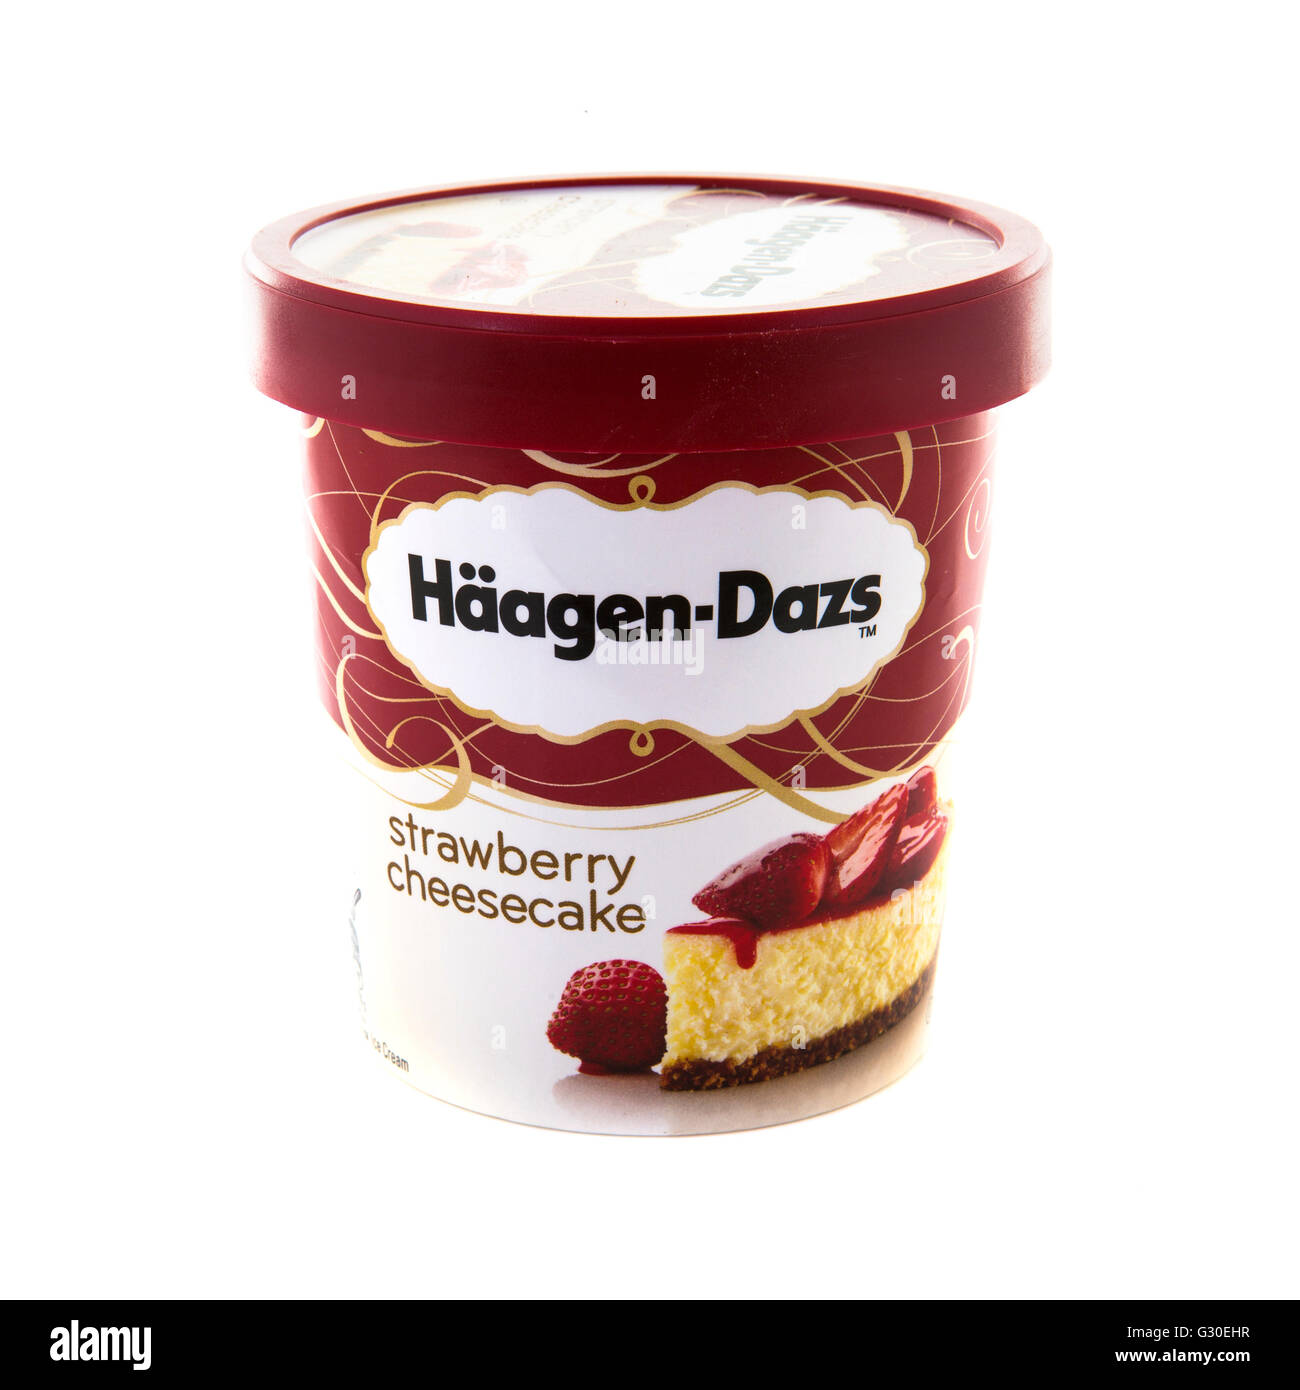 Vasca di Haagen-Dazs Strawberry Cheesecake gelati su sfondo bianco Foto Stock